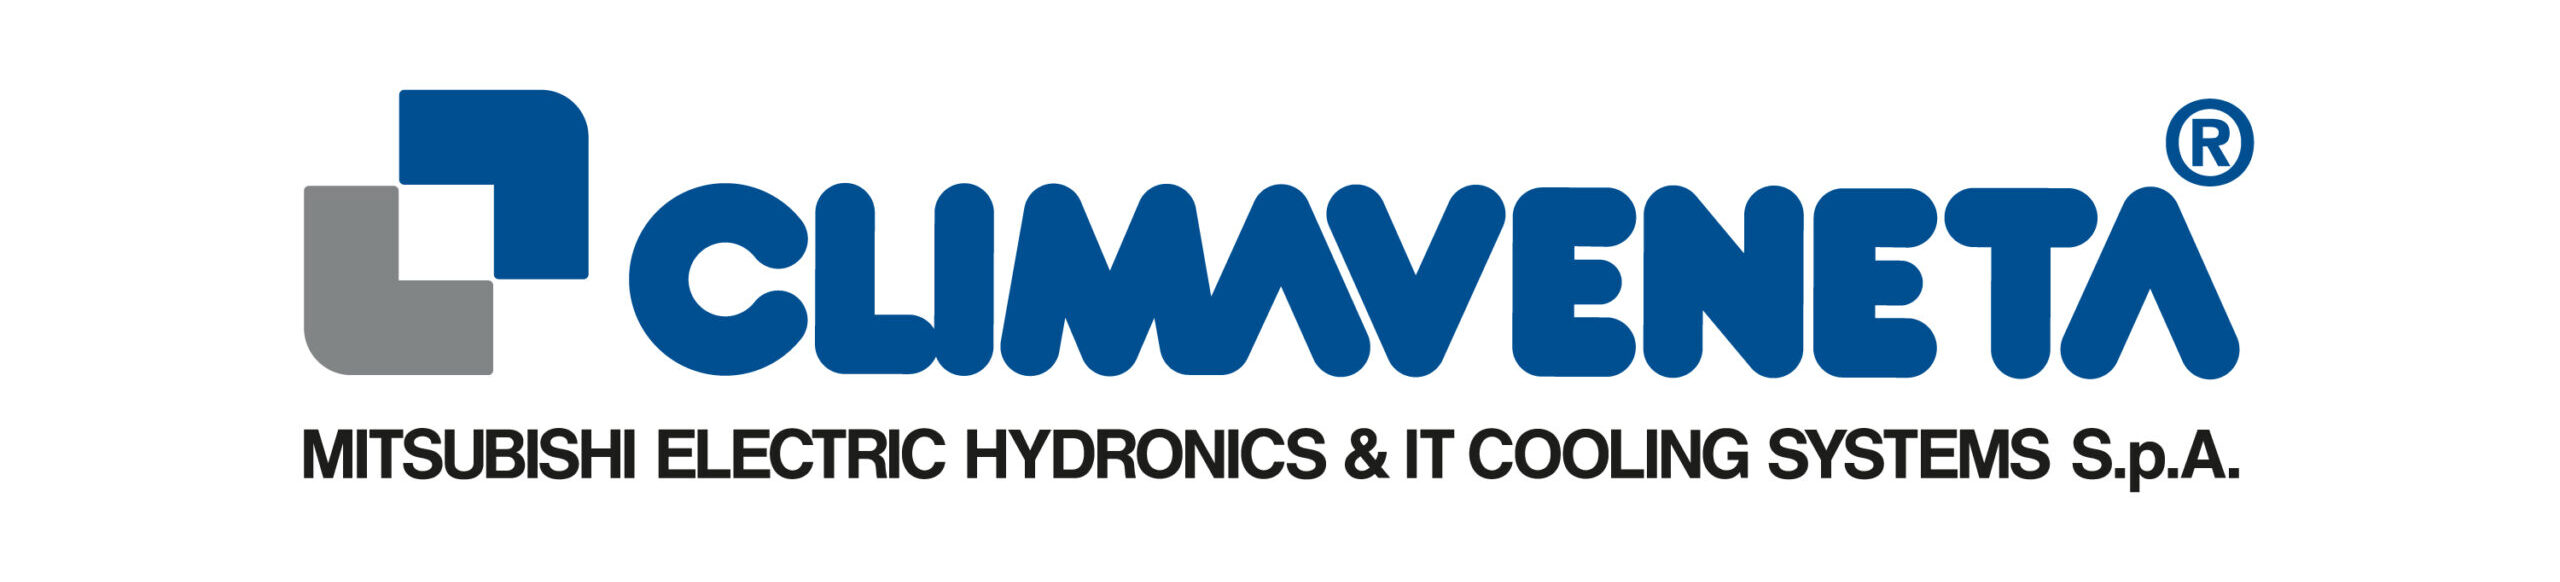 Climaveneta Logo with MEHITS